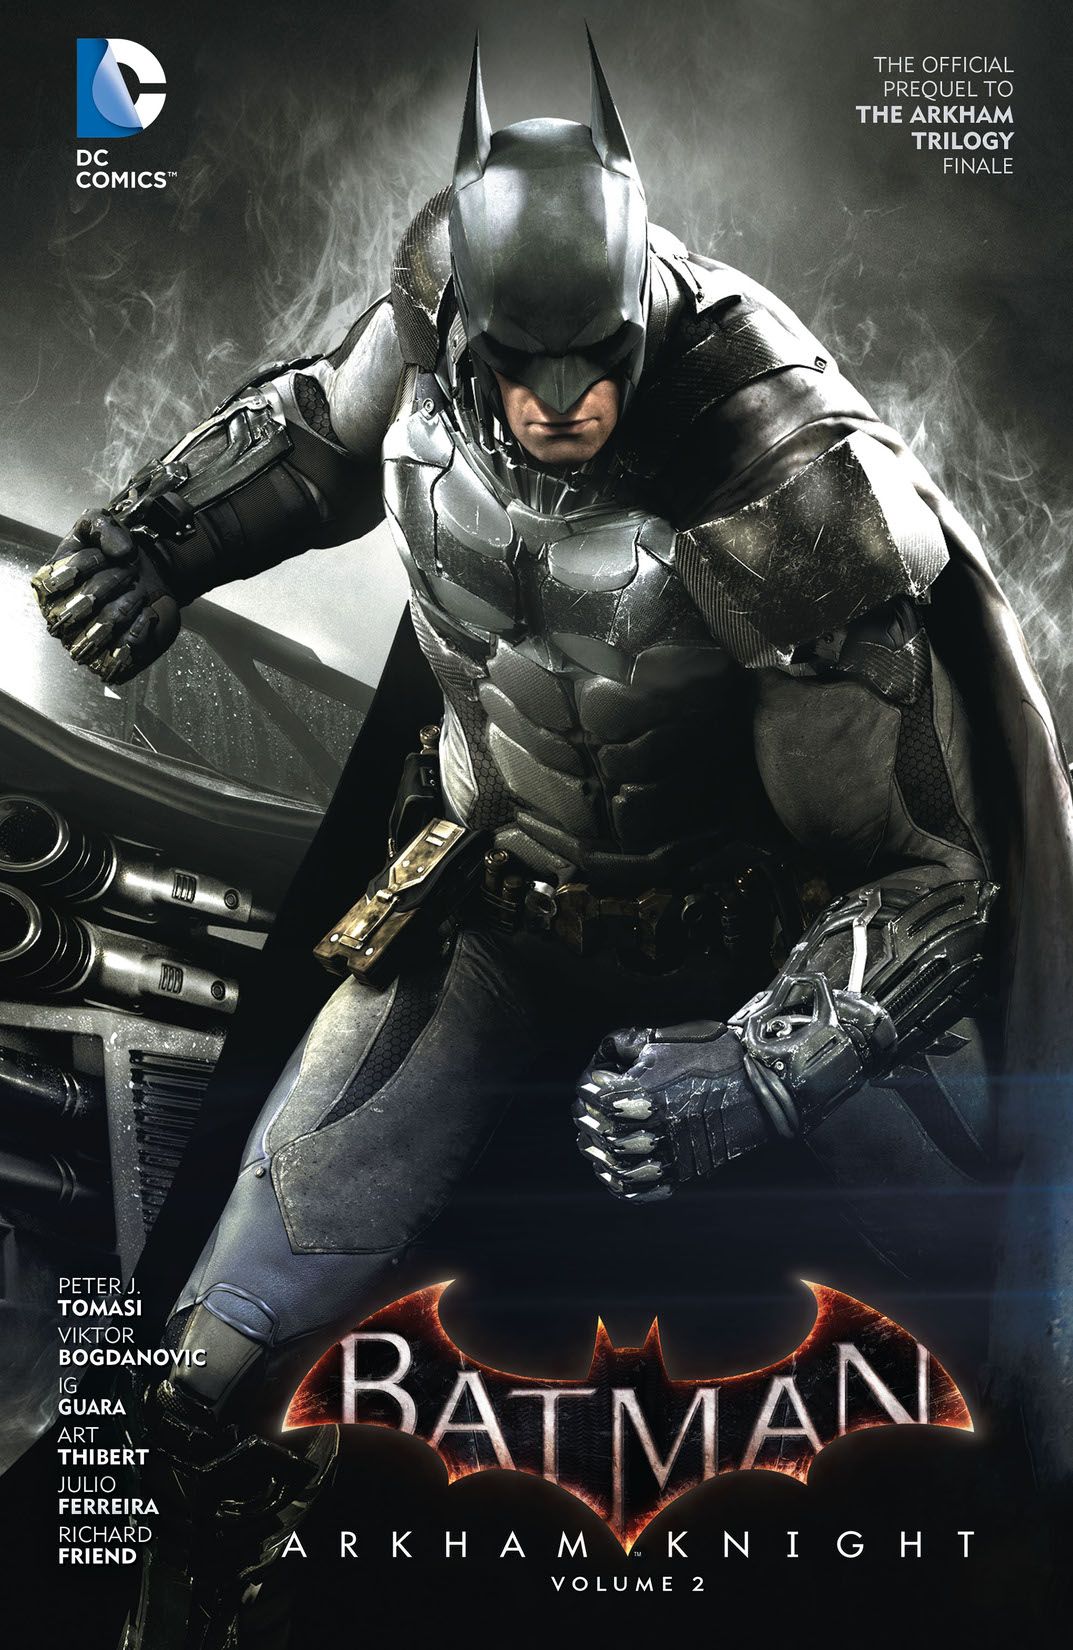 Batman: Arkham Knight Vol. 2 preview images